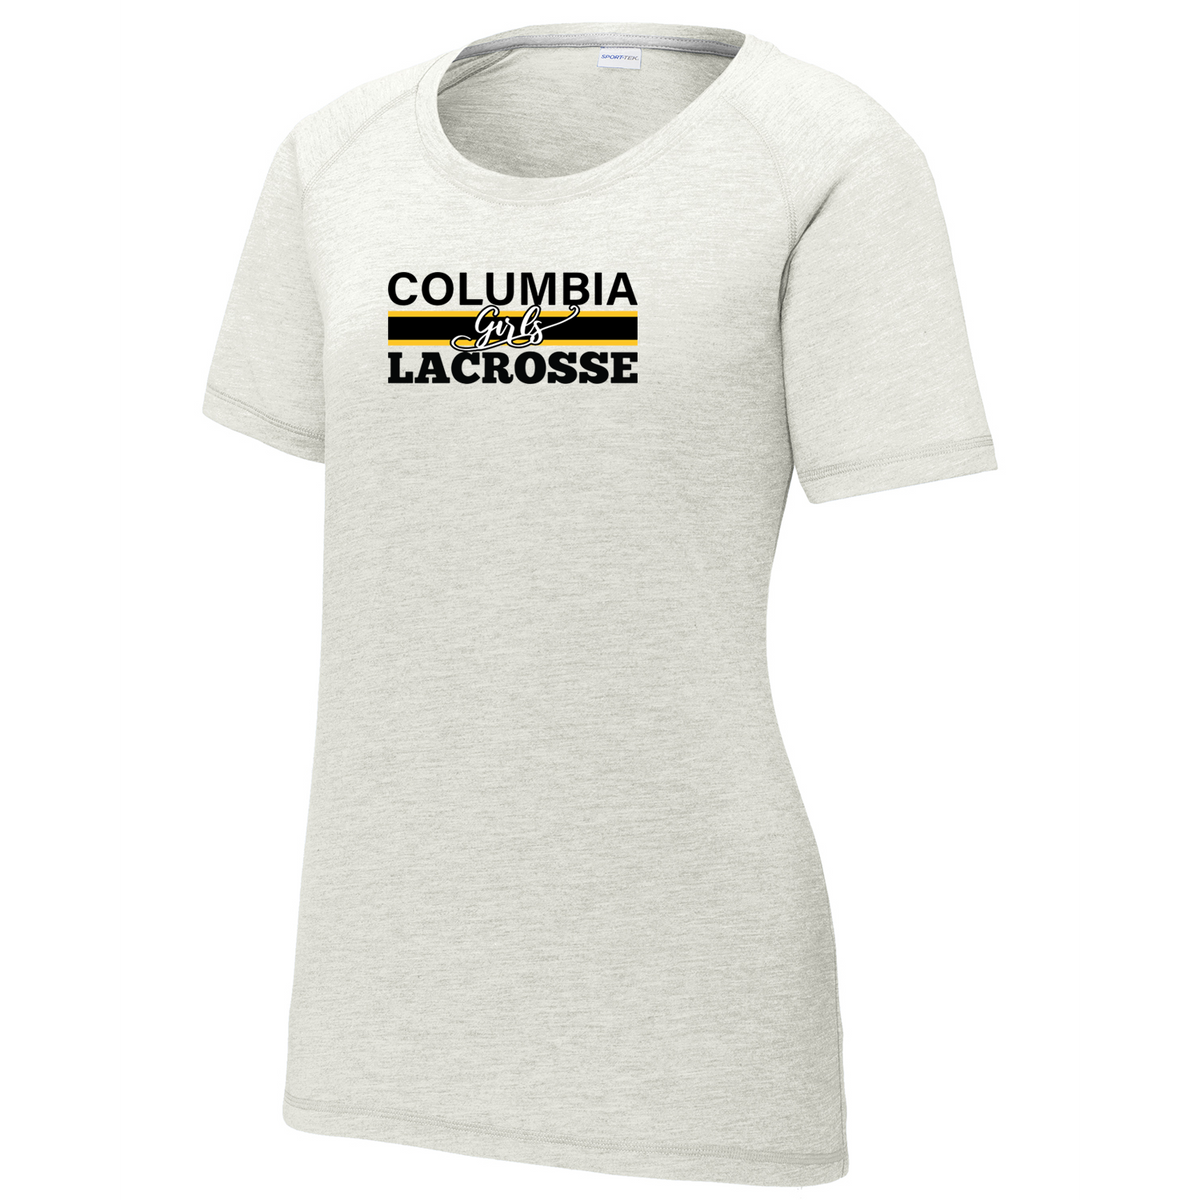 Columbia Girls Lacrosse  Women's Raglan CottonTouch